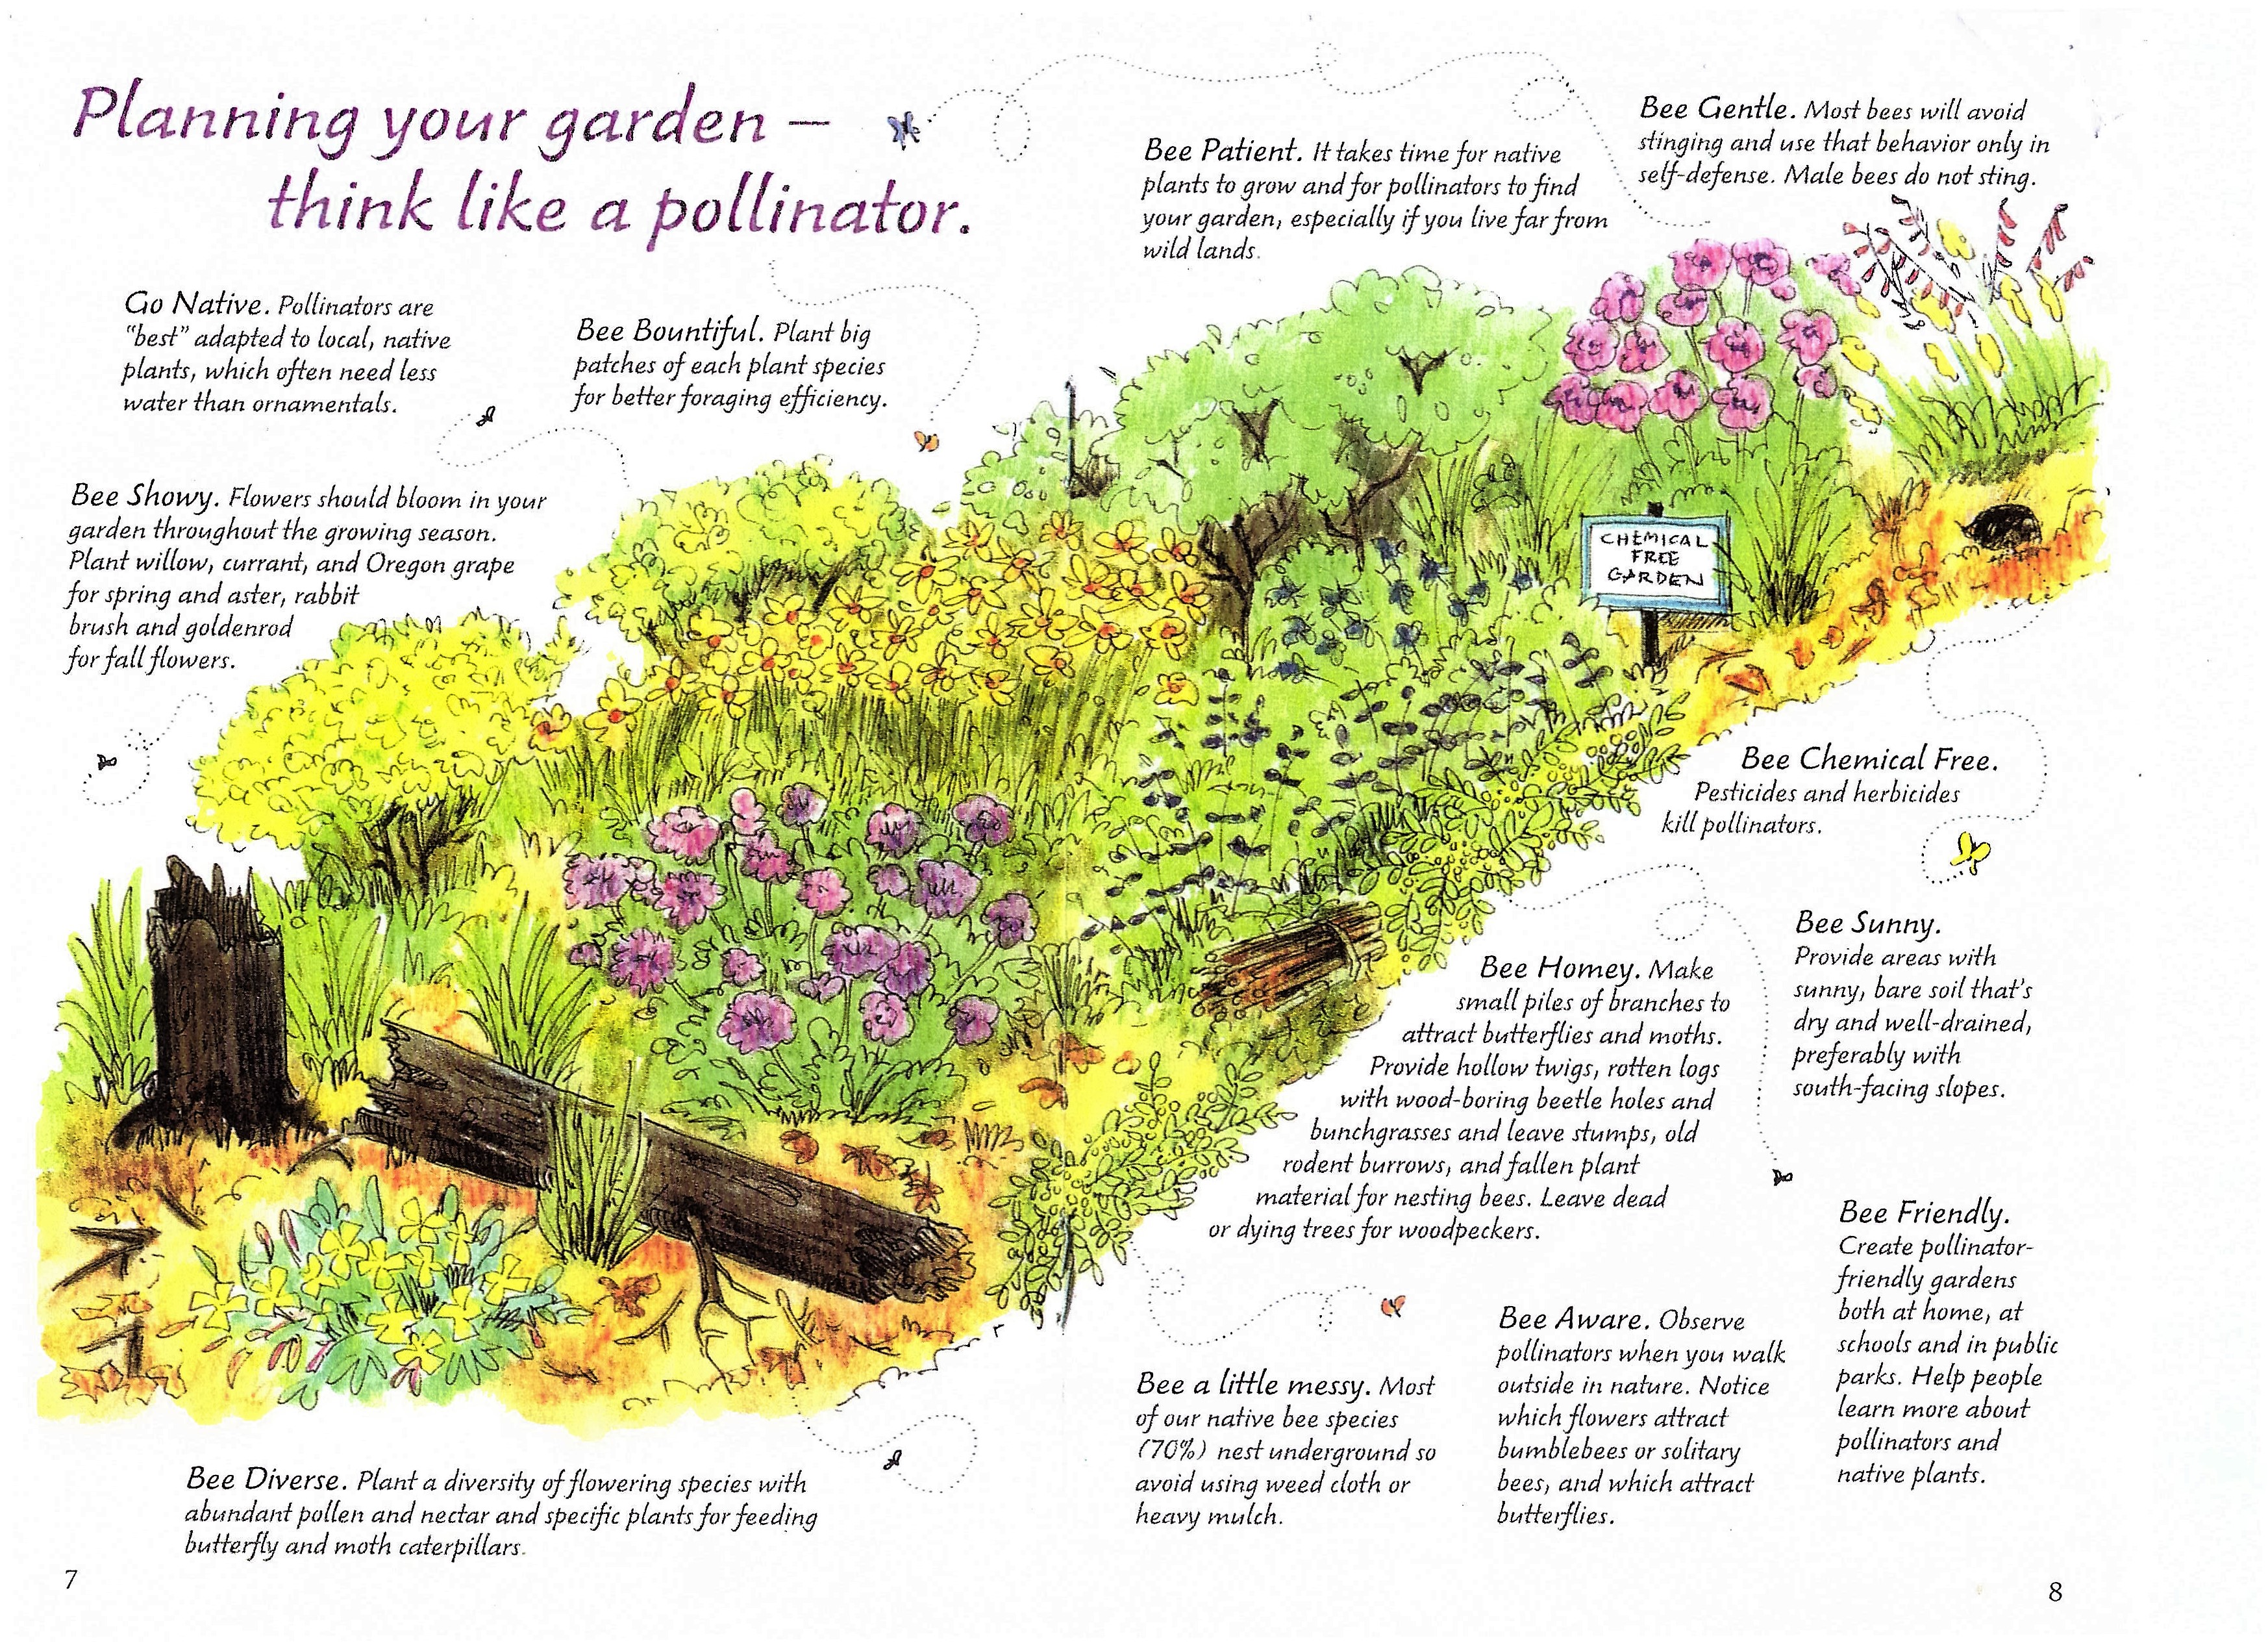 Illustration of a pollinator garden